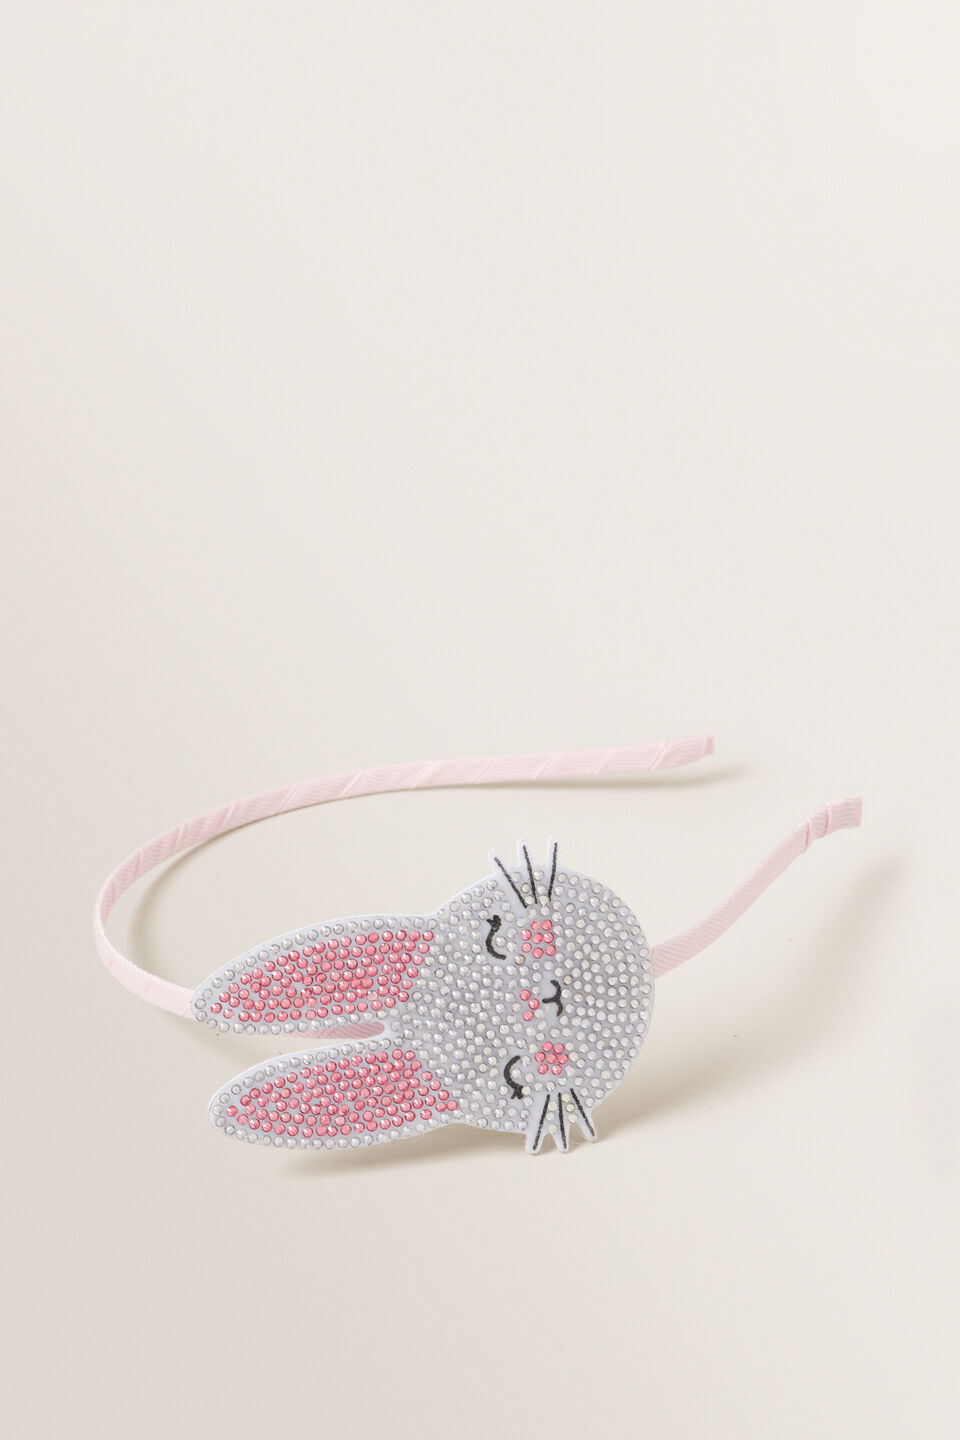 Gem Patch Bunny Headband  Multi